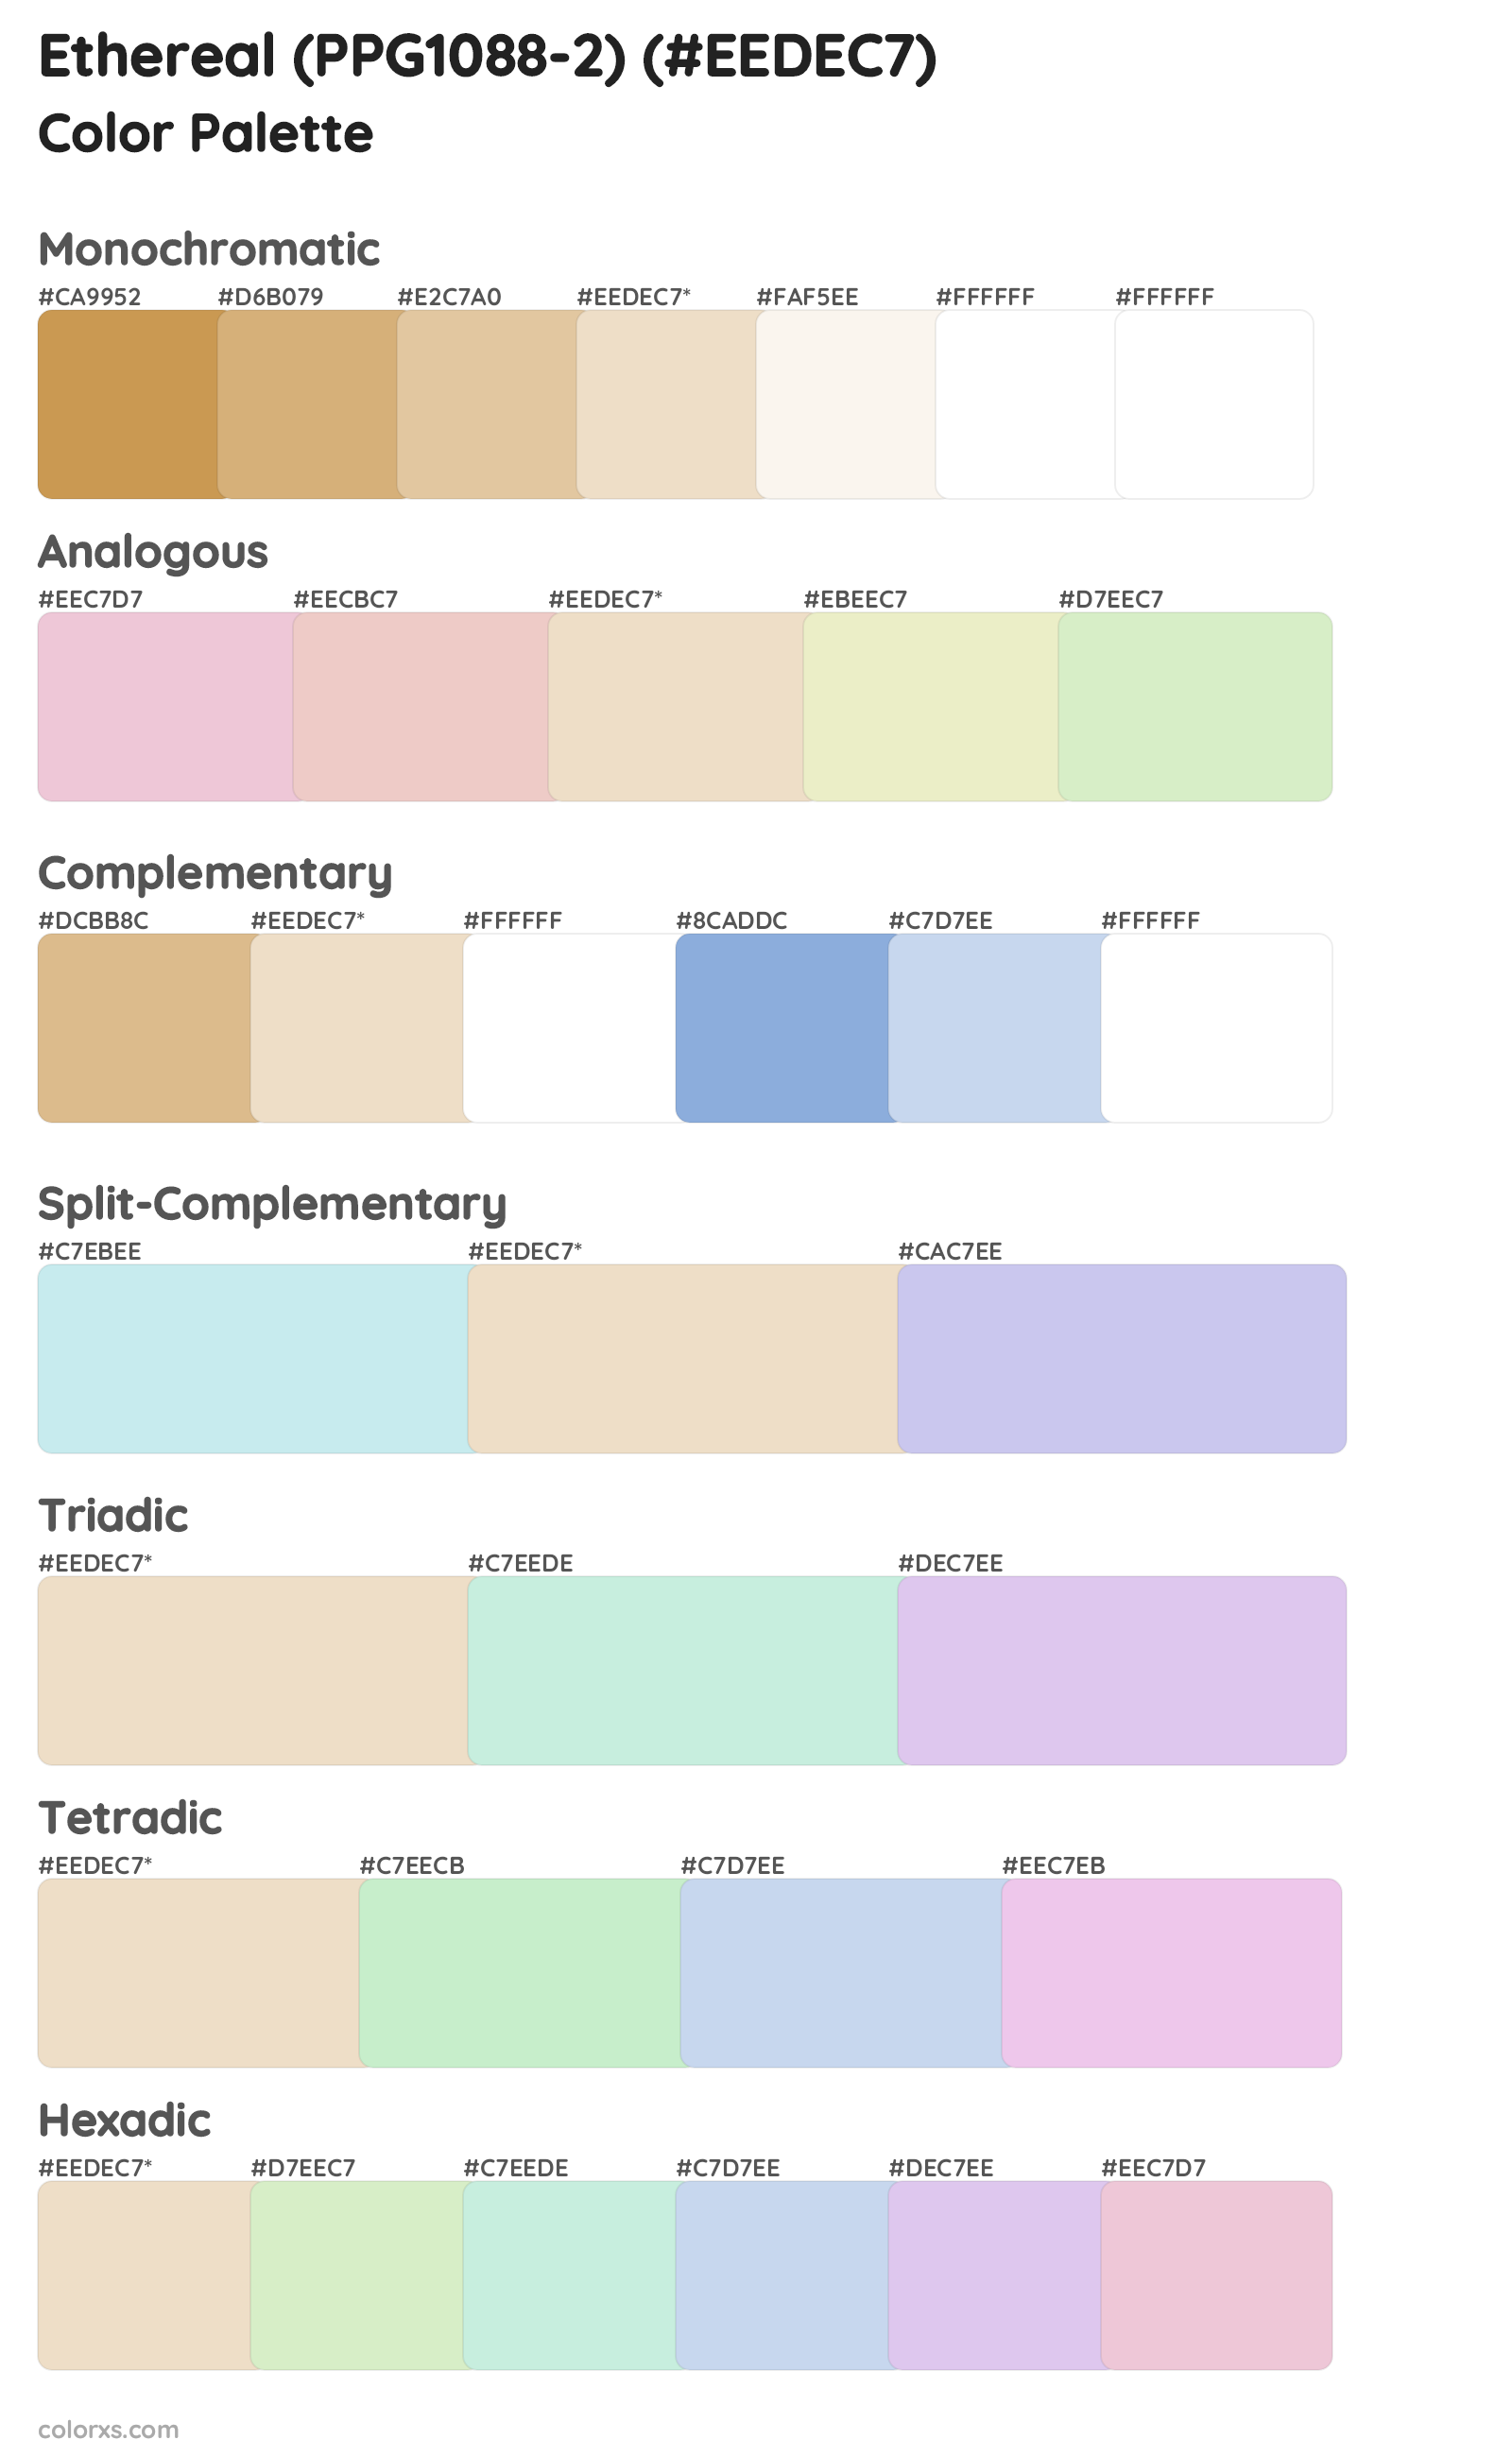 Ethereal (PPG1088-2) Color Scheme Palettes